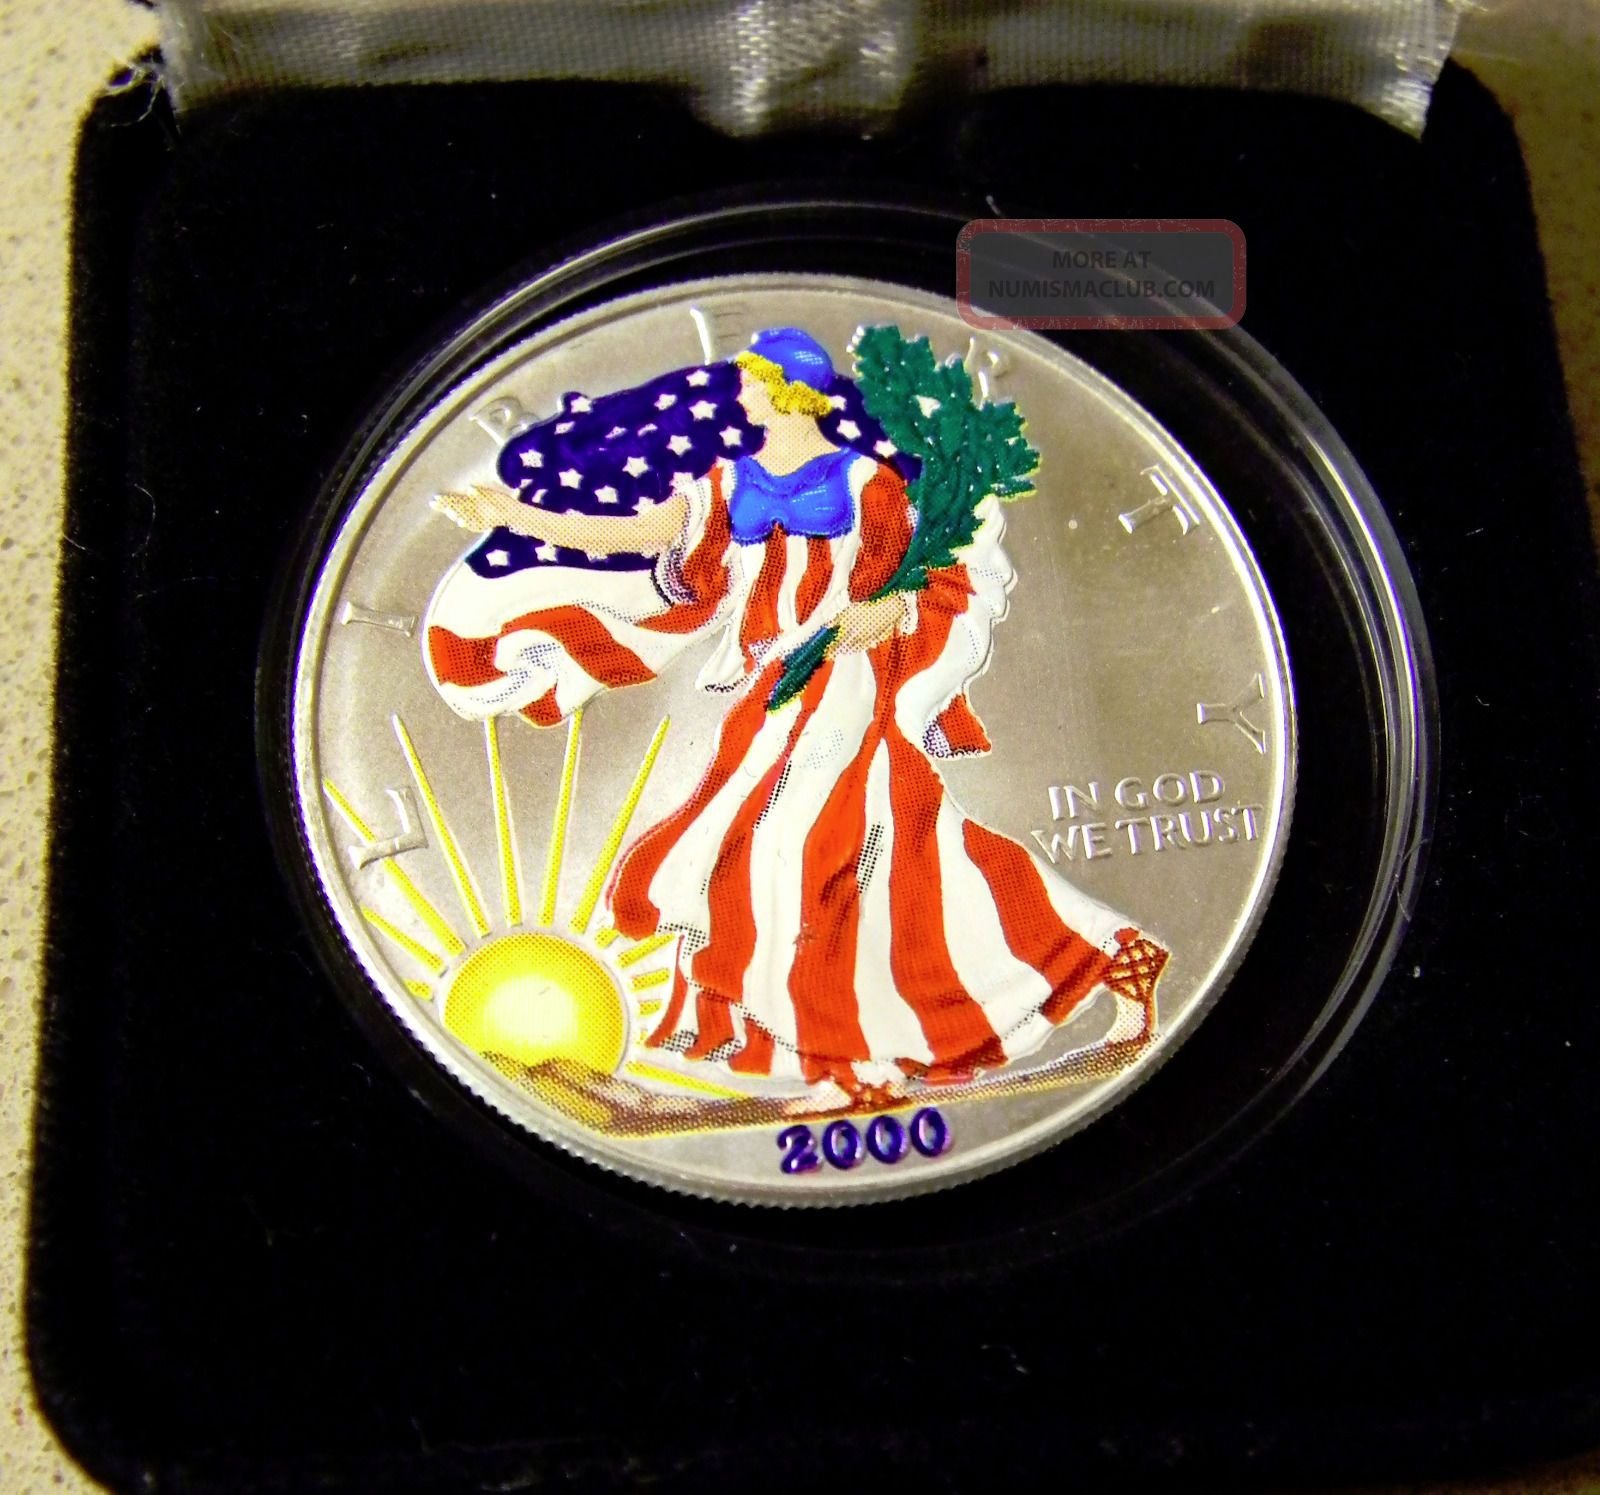 1987 us liberty coins silver dollar